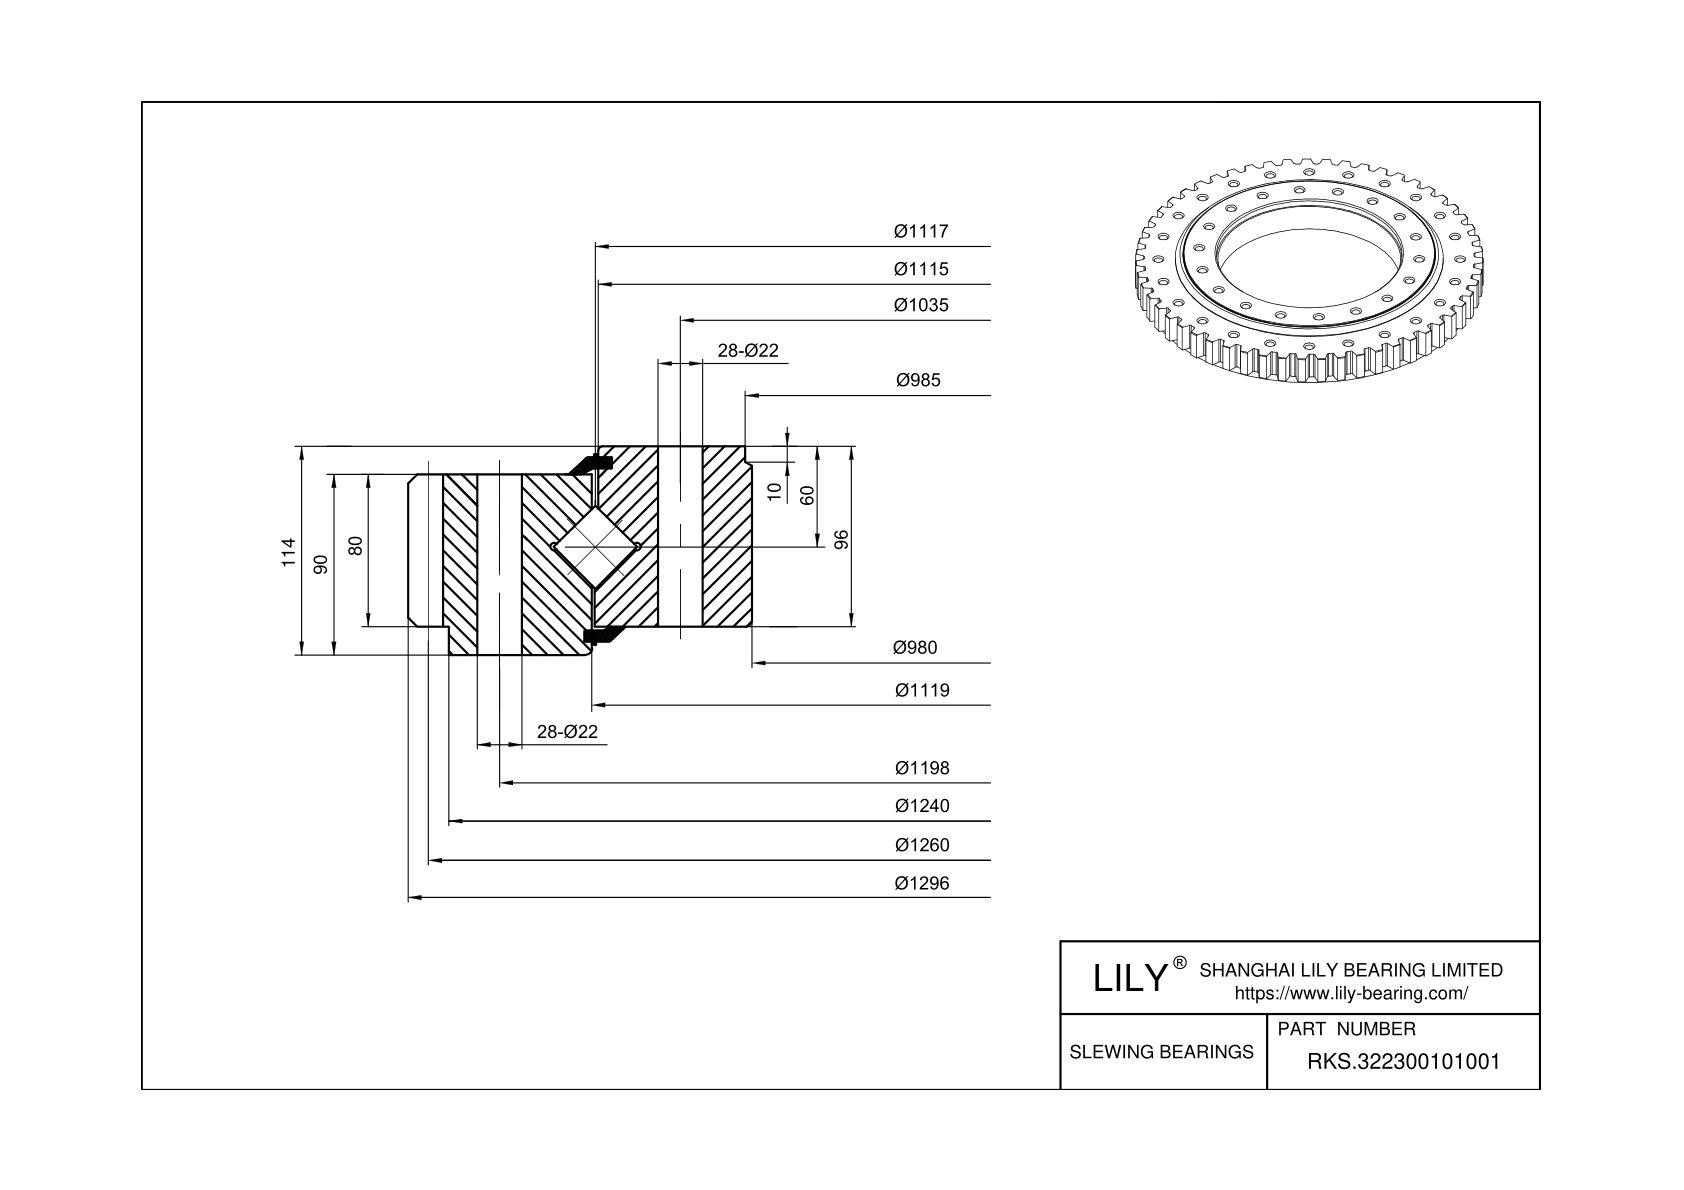 RKS.322300101001 Cross Roller Slewing Ring Bearing cad drawing